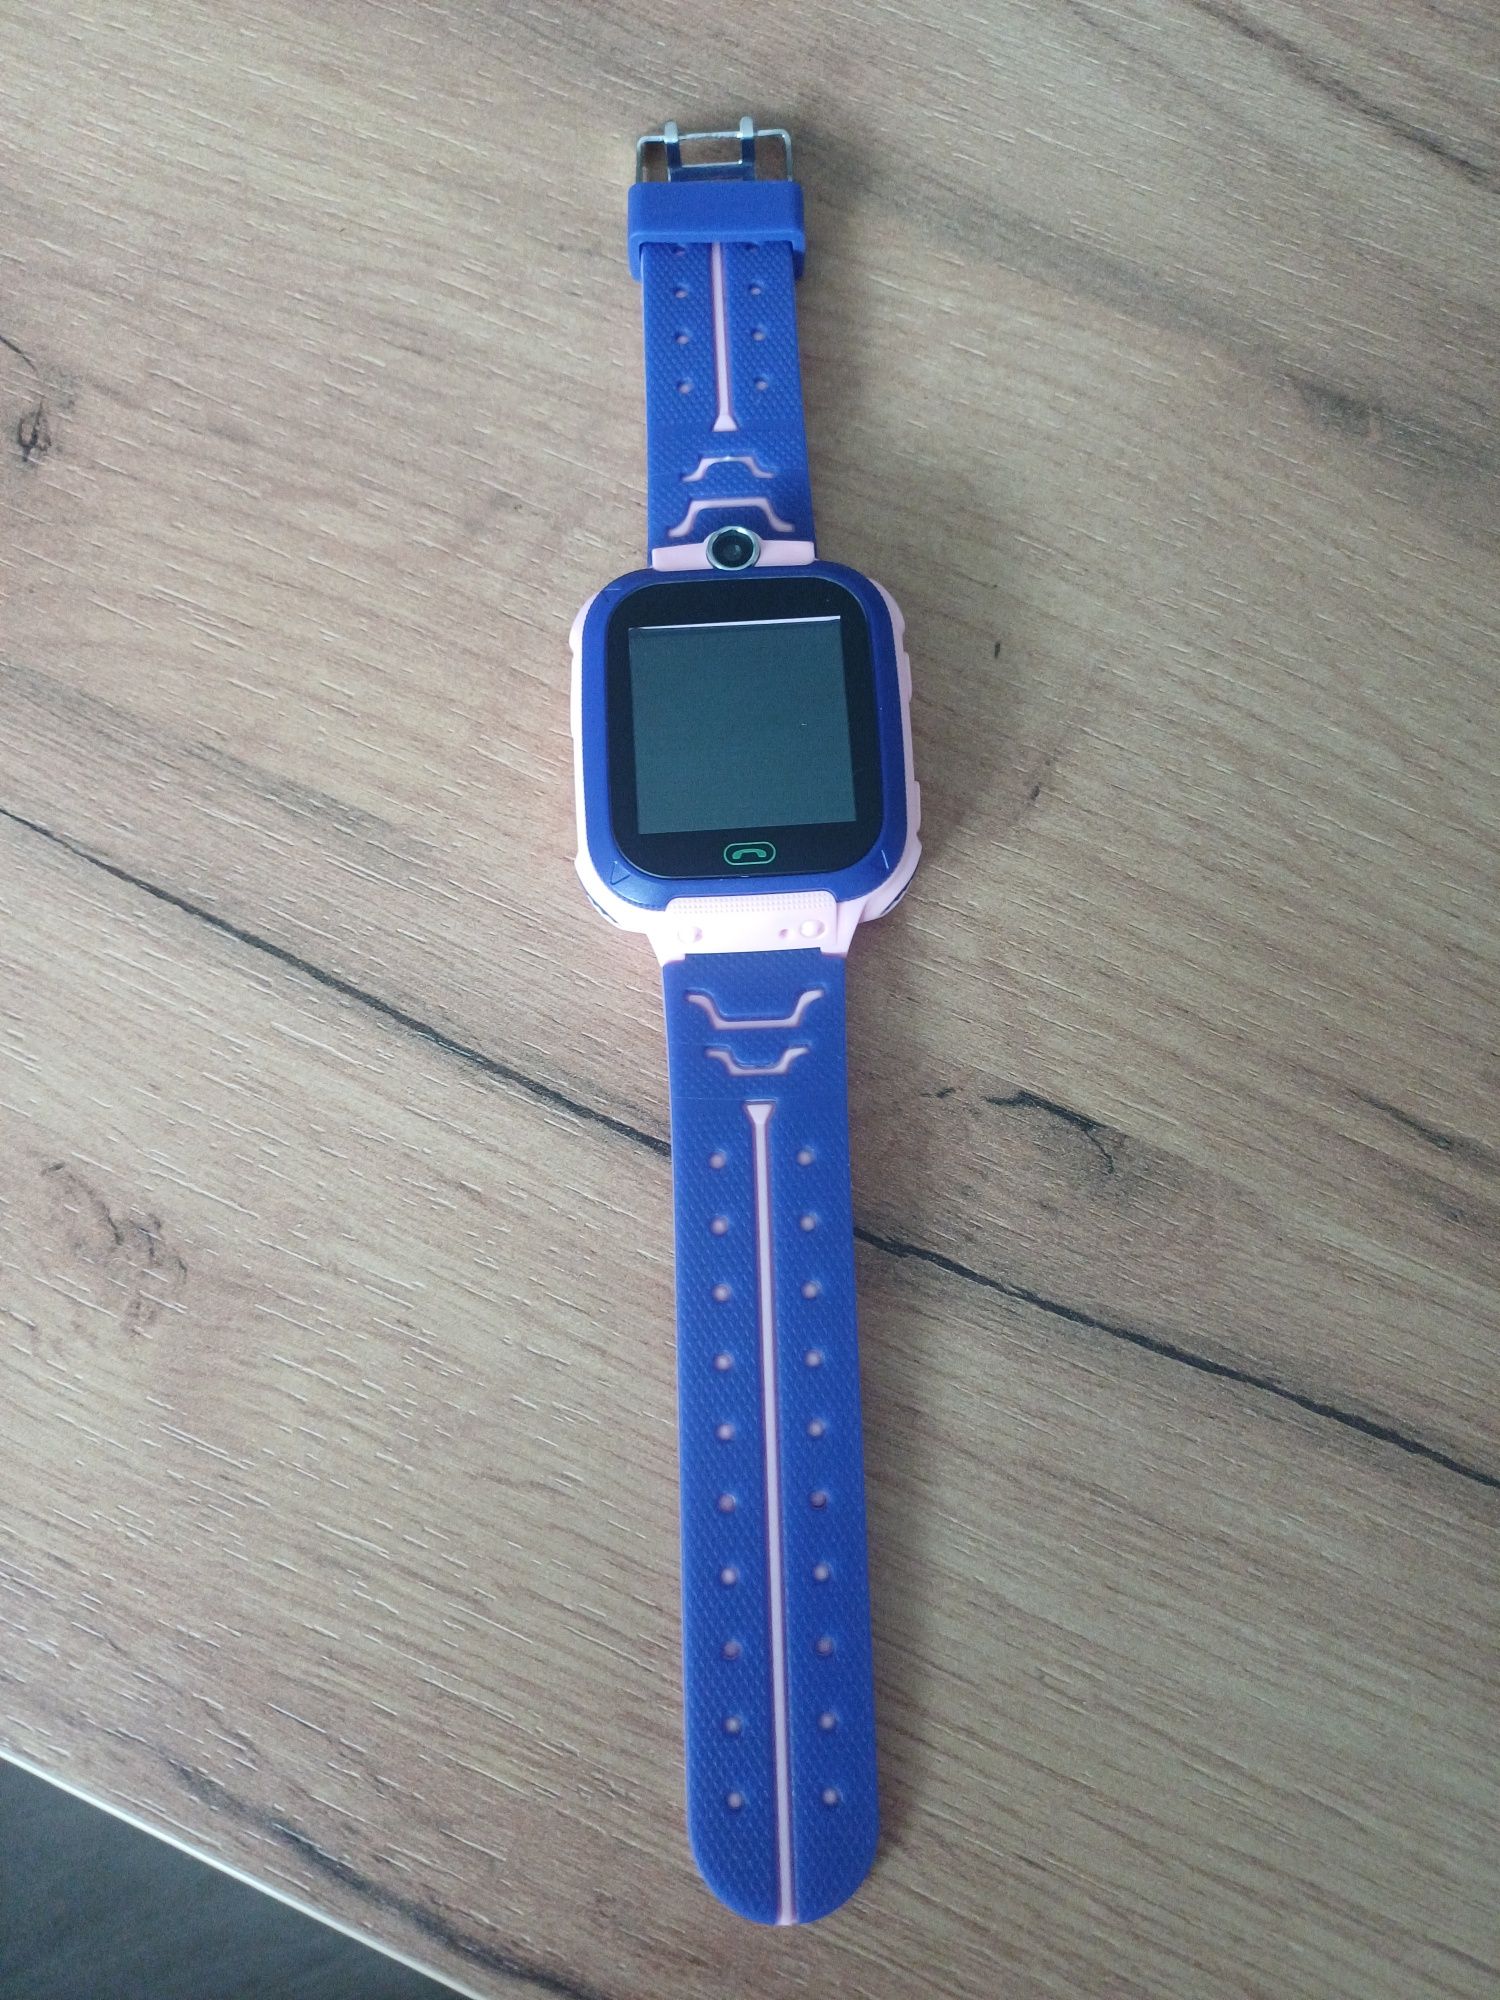 Zegarek typu smartwatch